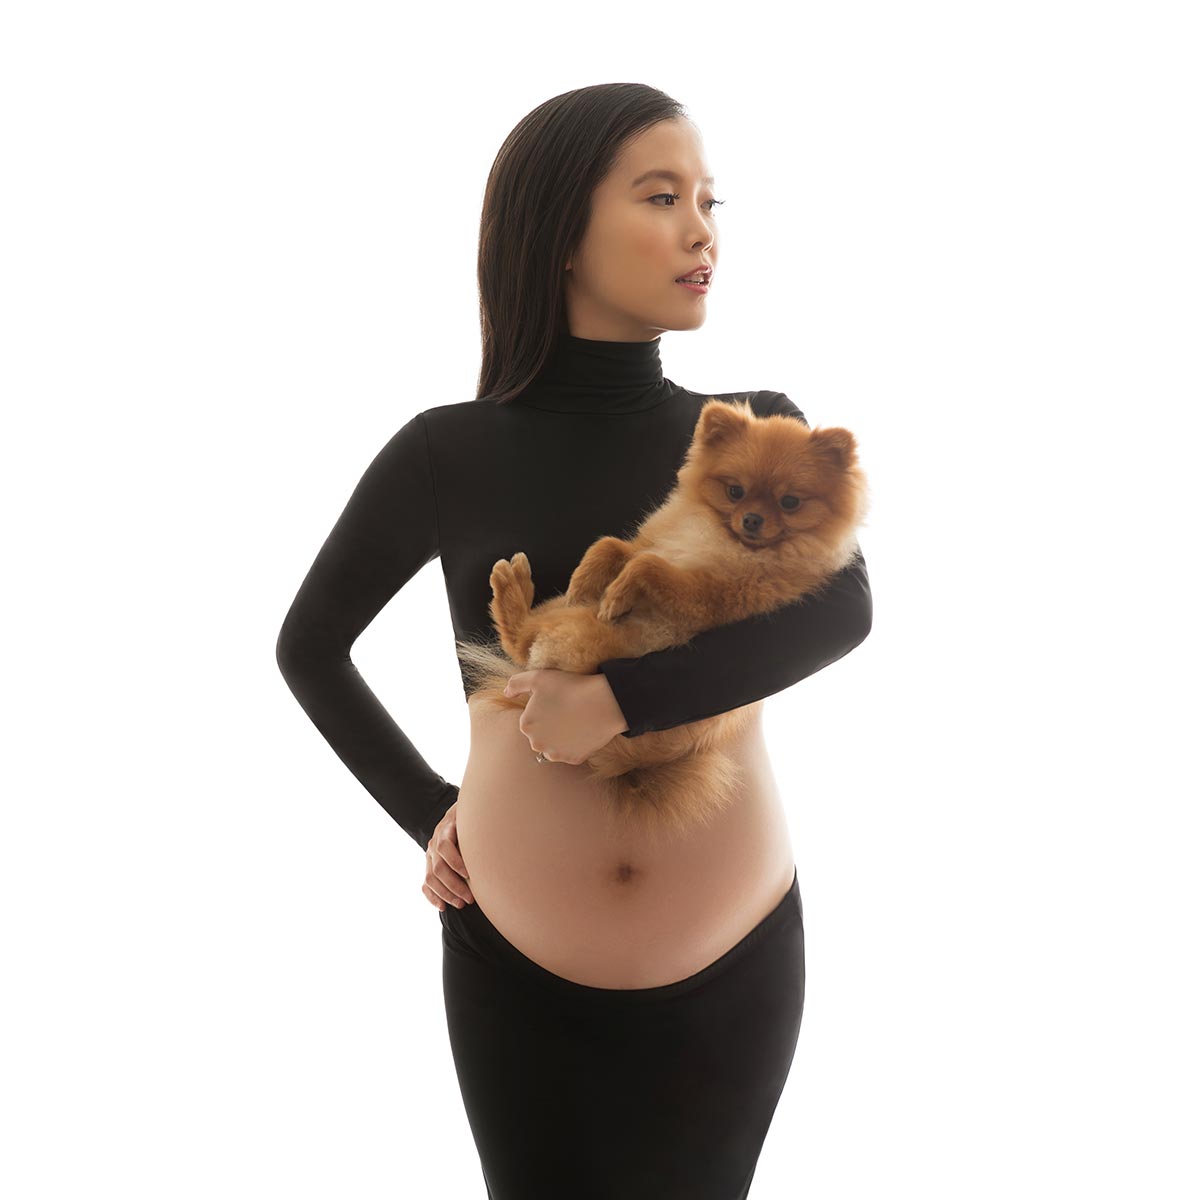 Pregnant woman holding a cute dog